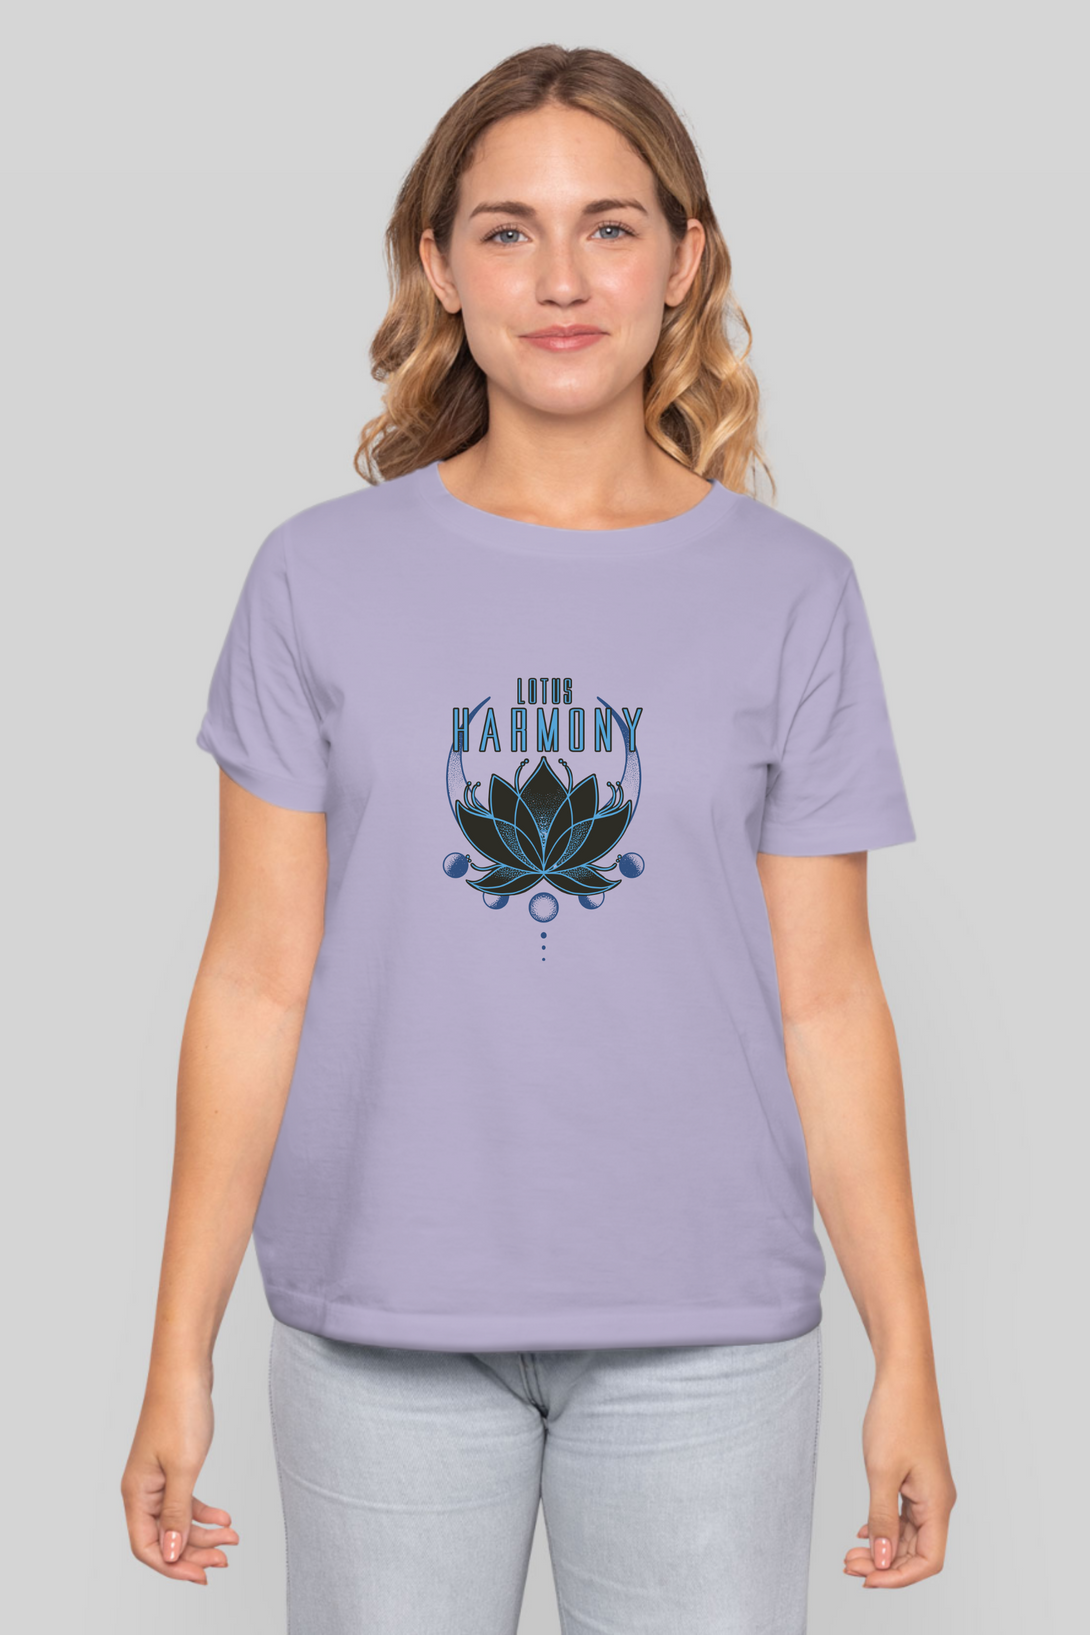 Harmony Lotus Printed T-Shirt For Women - WowWaves - 9